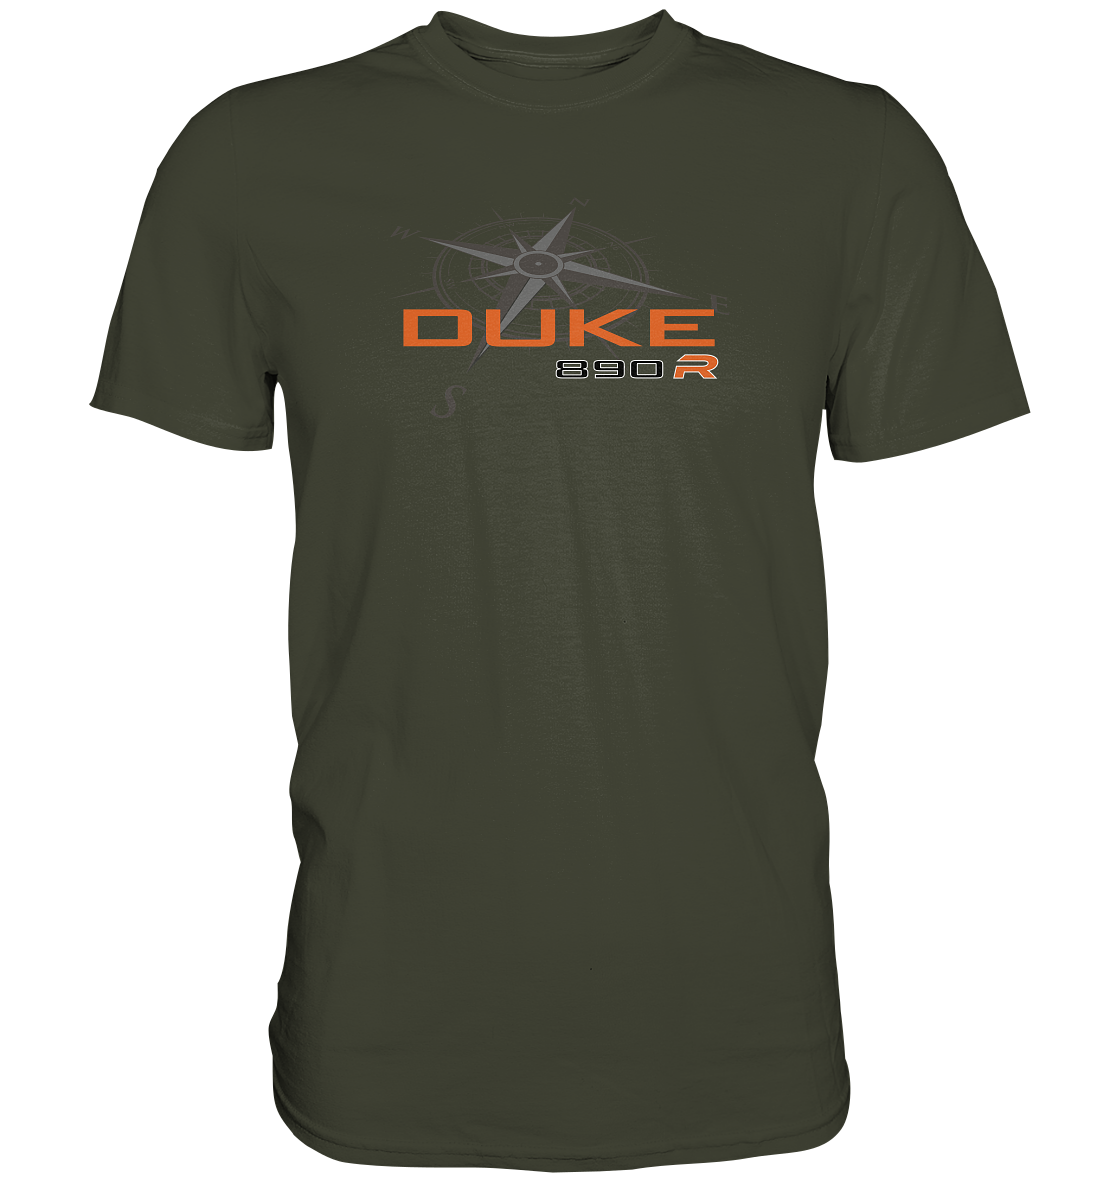 Duke 890R Kompass - Premium unisex Shirt